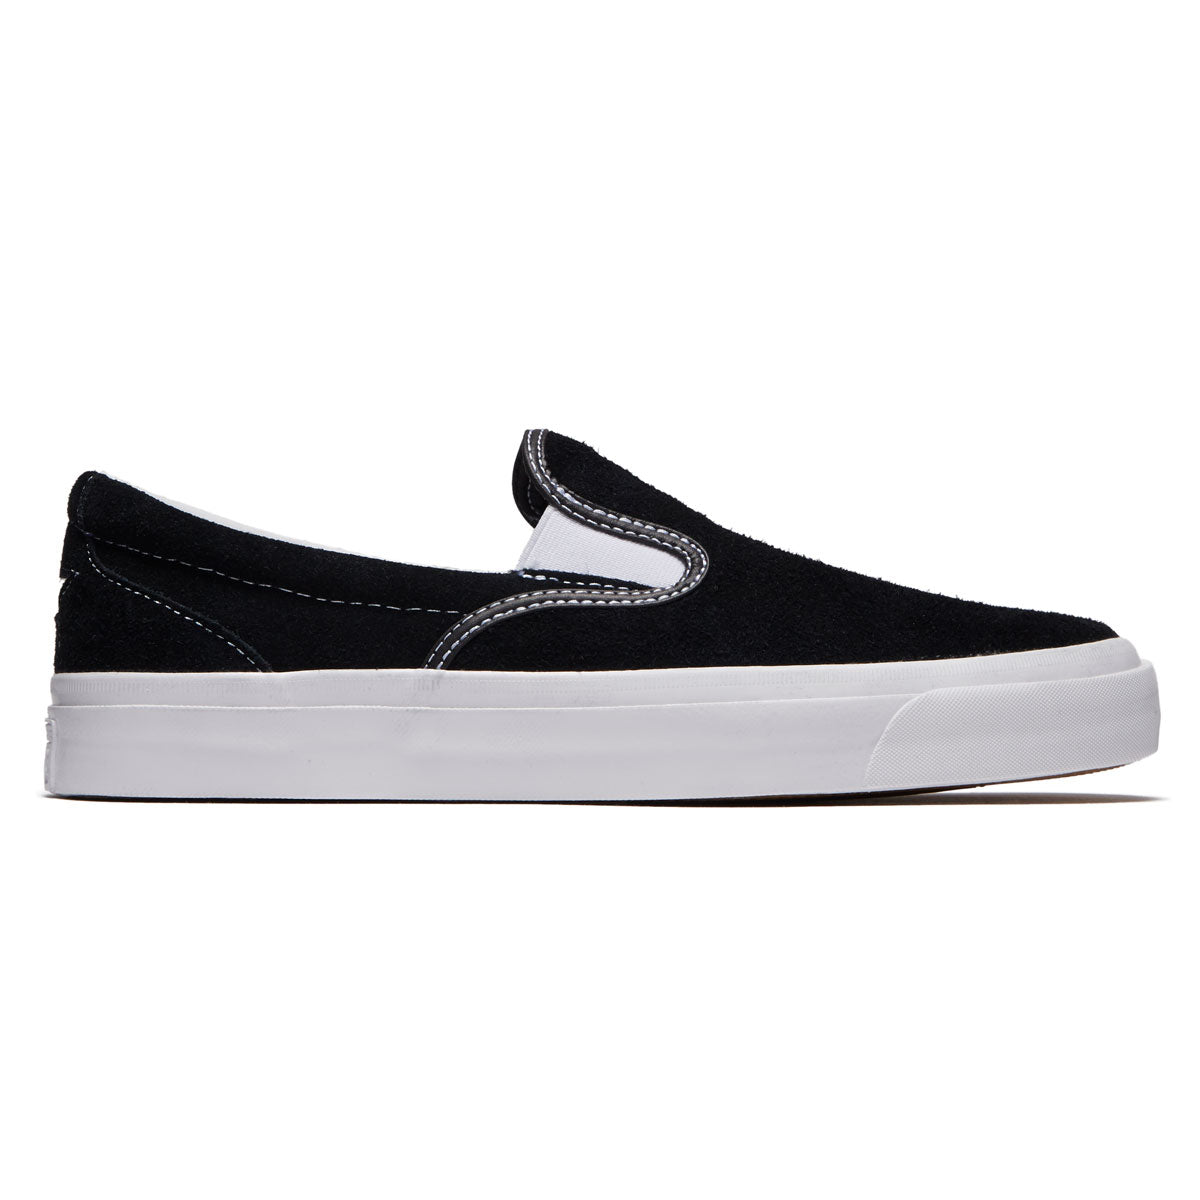 Converse One Star Cc Slip Pro Shoes - Black/White/White image 1